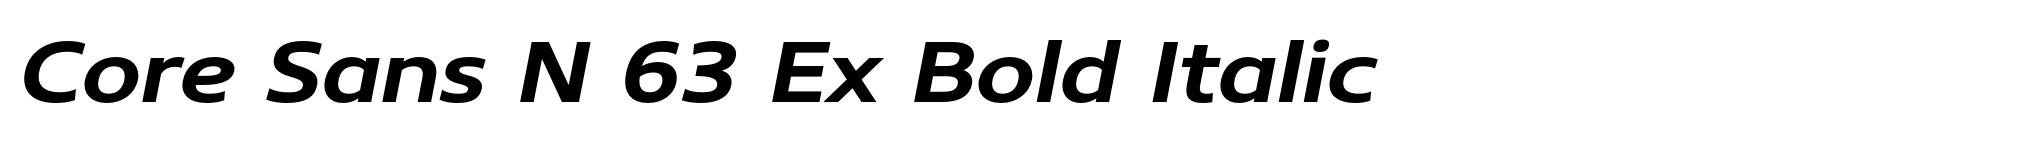 Core Sans N 63 Ex Bold Italic image